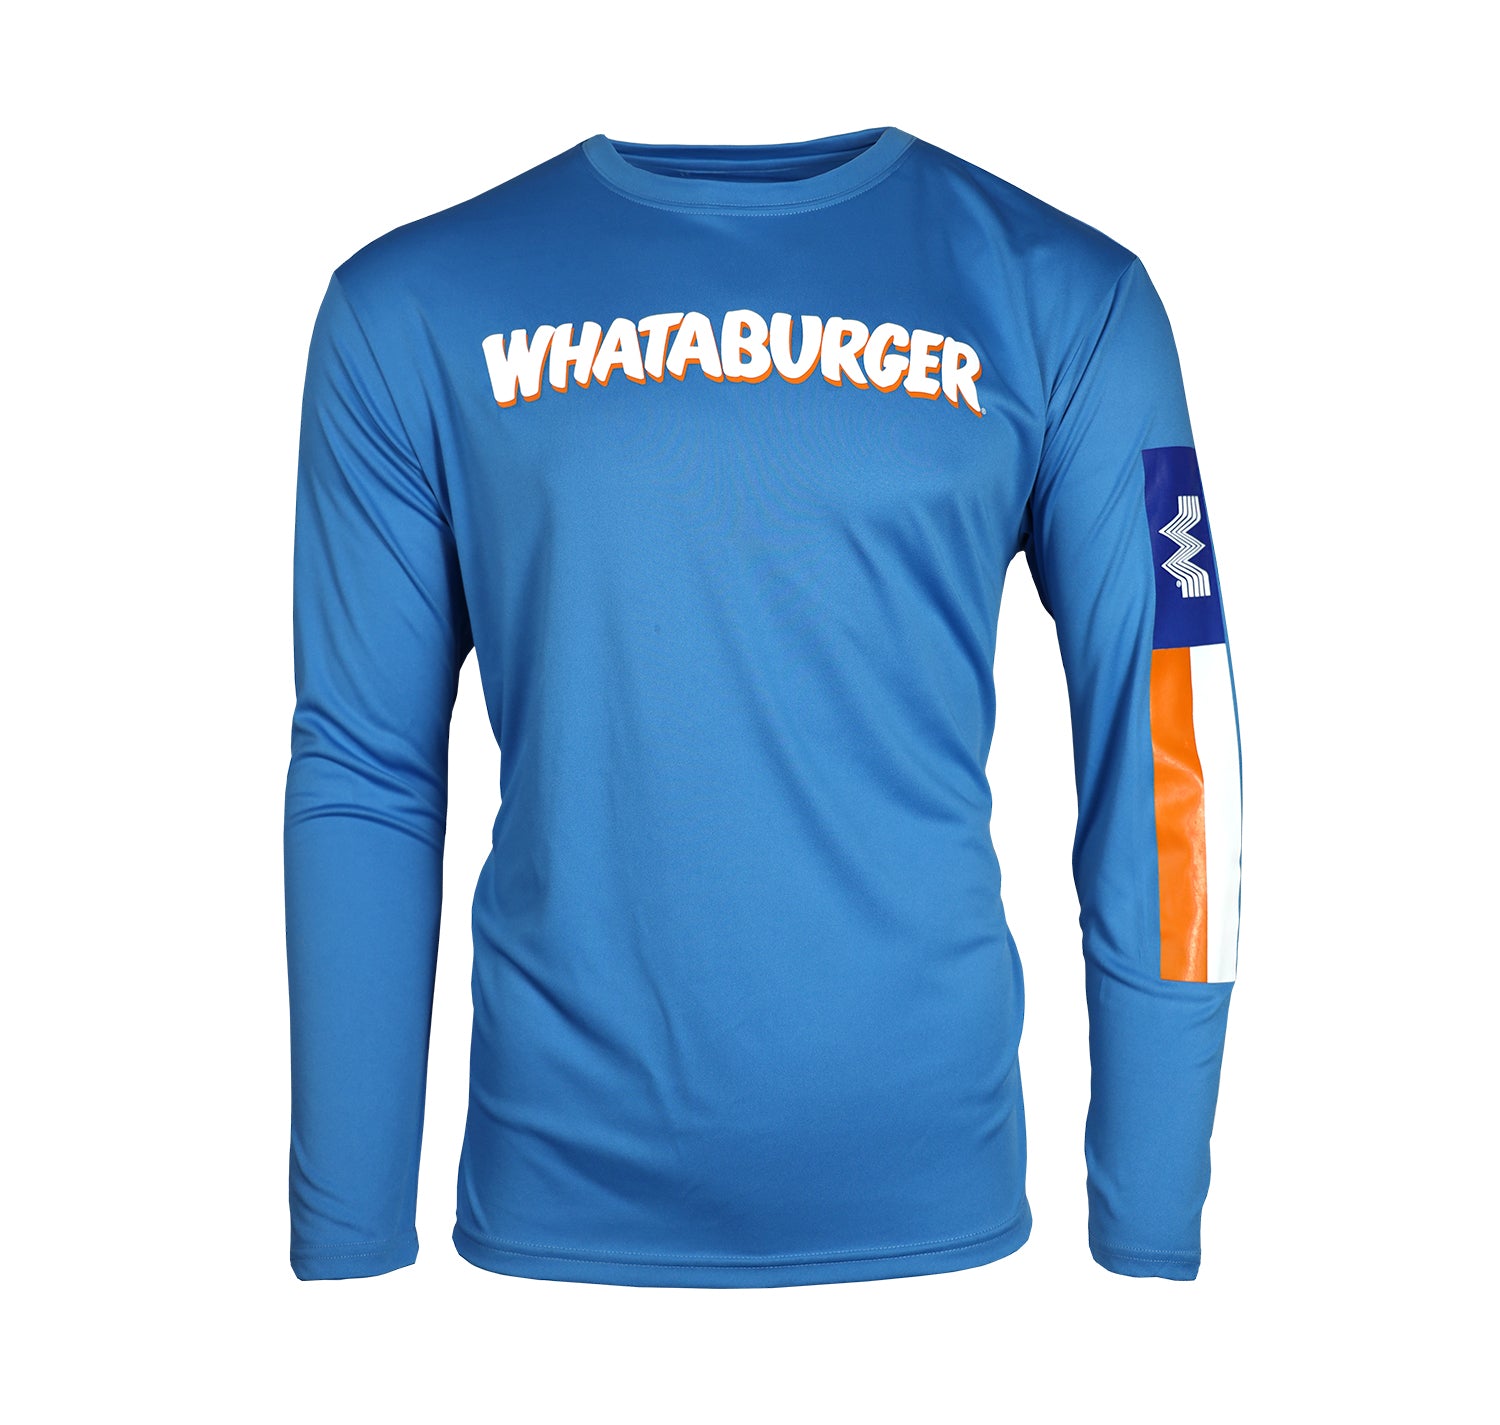 whataburger uniform blue